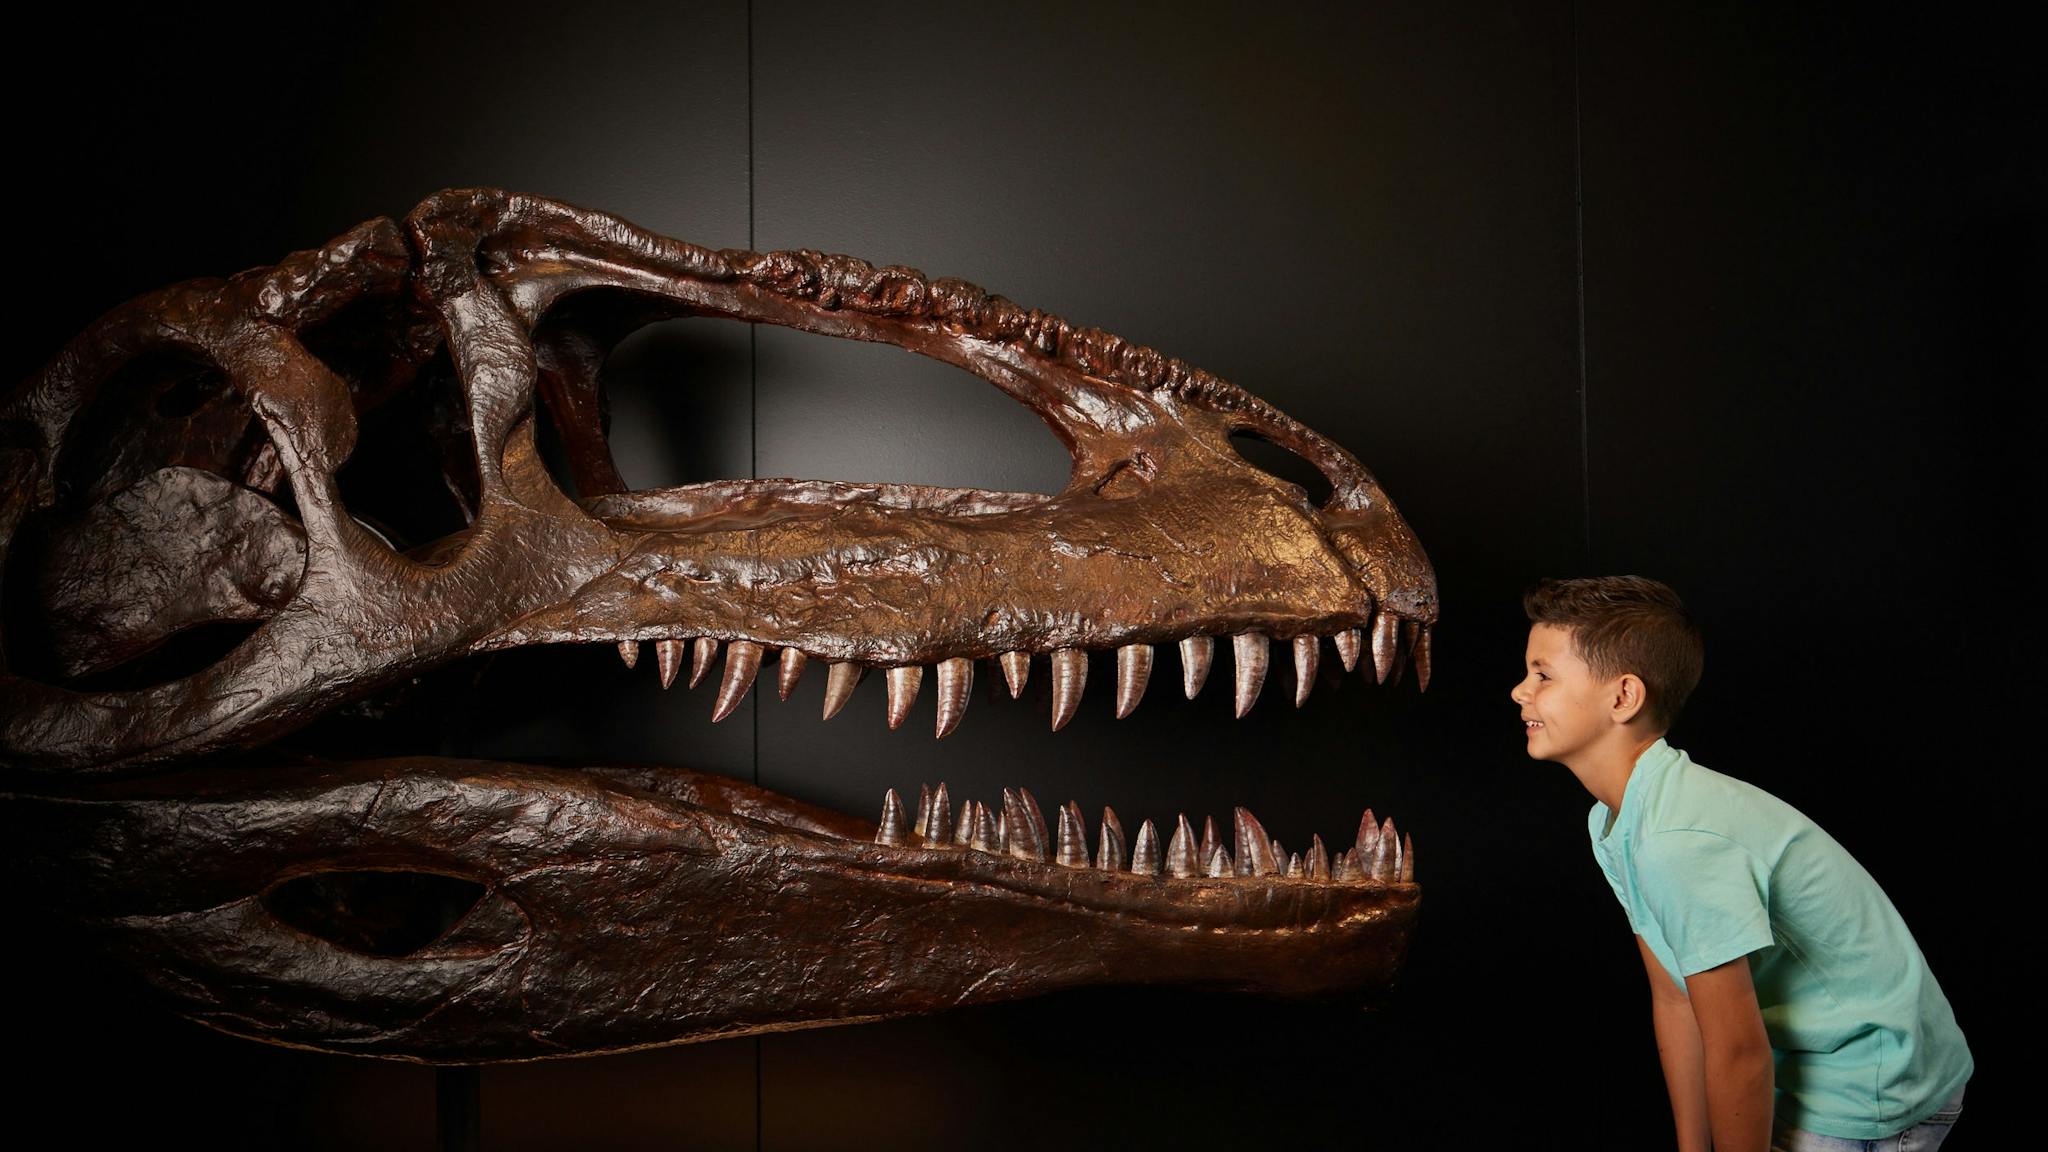 Dinosaurs of Patagonia at Queensland Museum